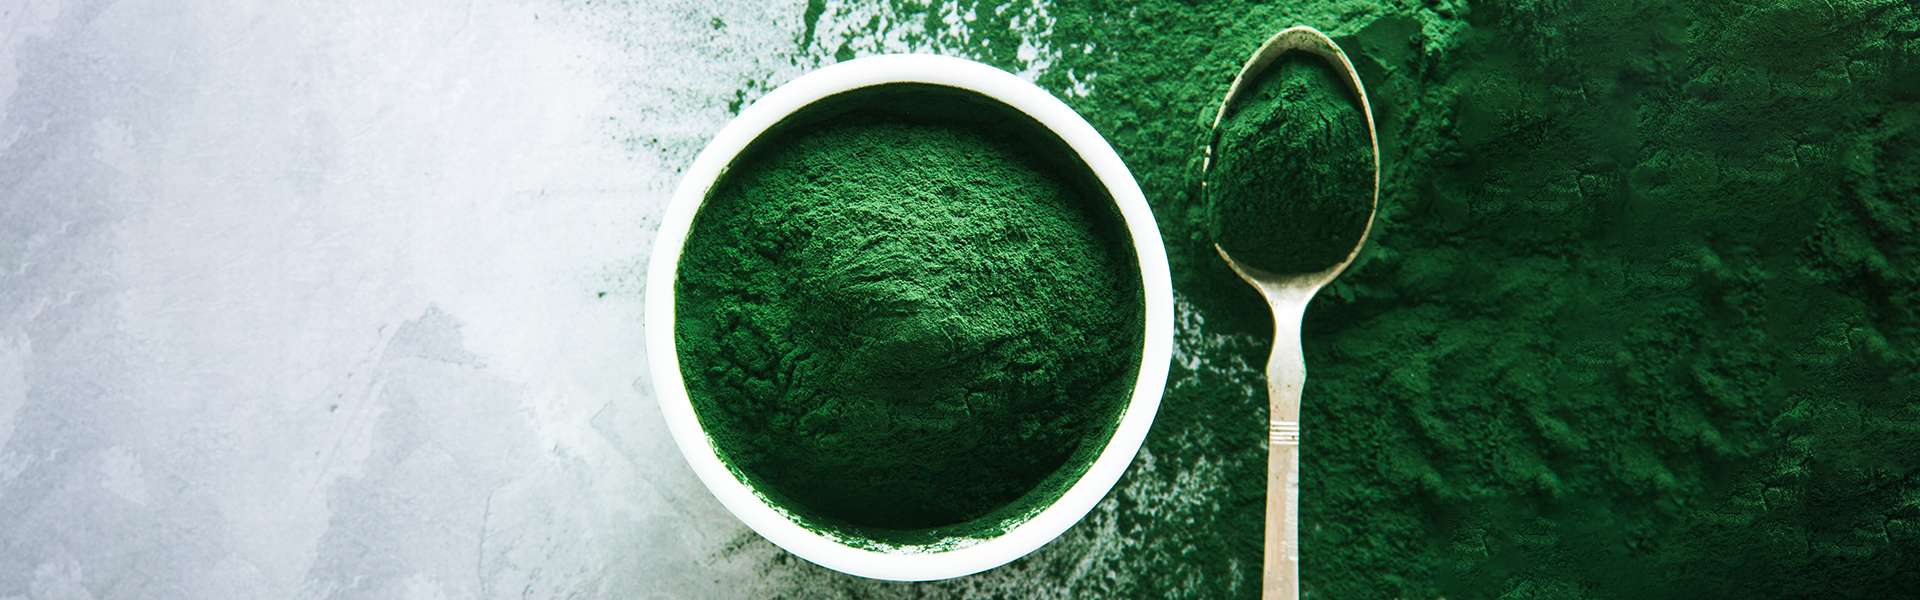 L'alga Spirulina e i suoi molteplici benefici